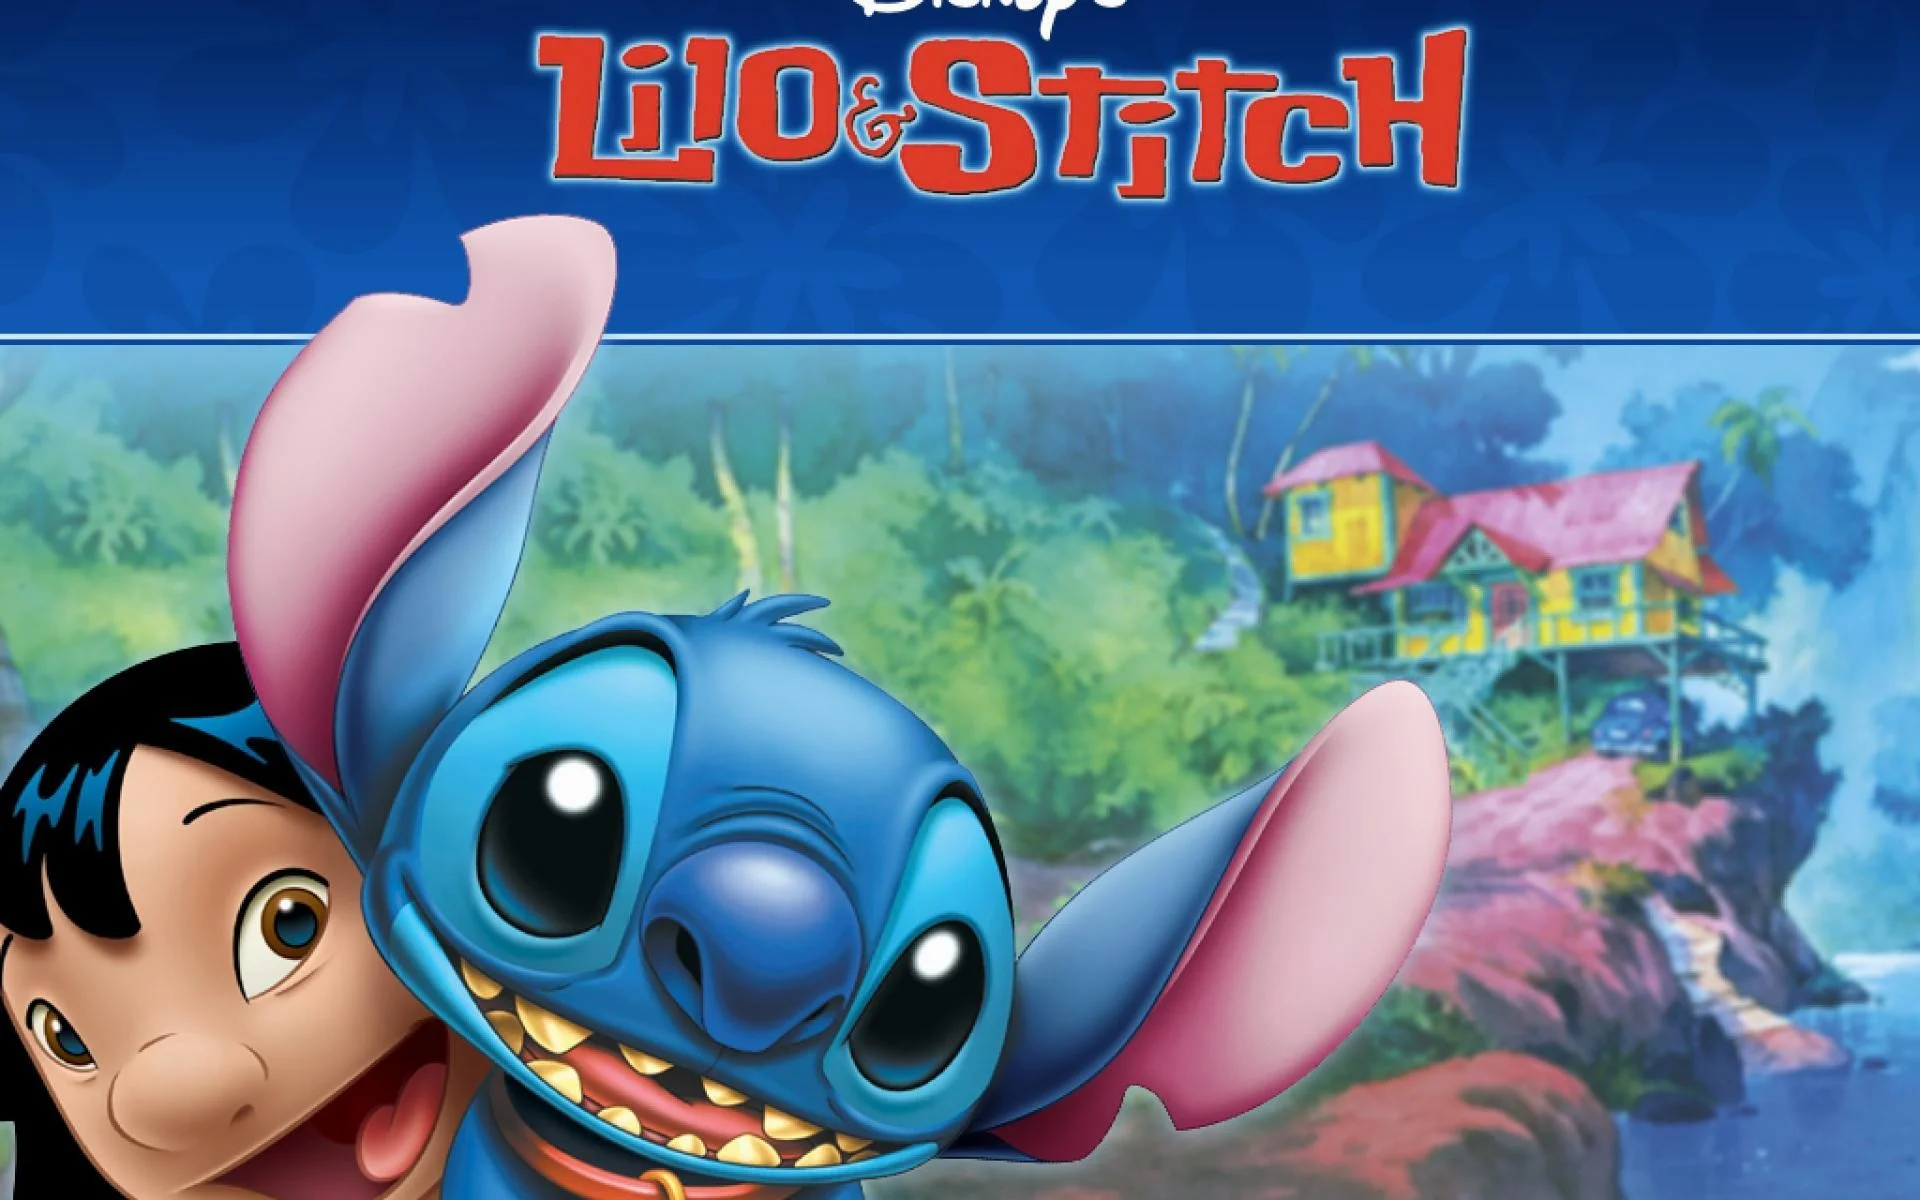 Lilo-stitch-film-movies-hd-wallpapers